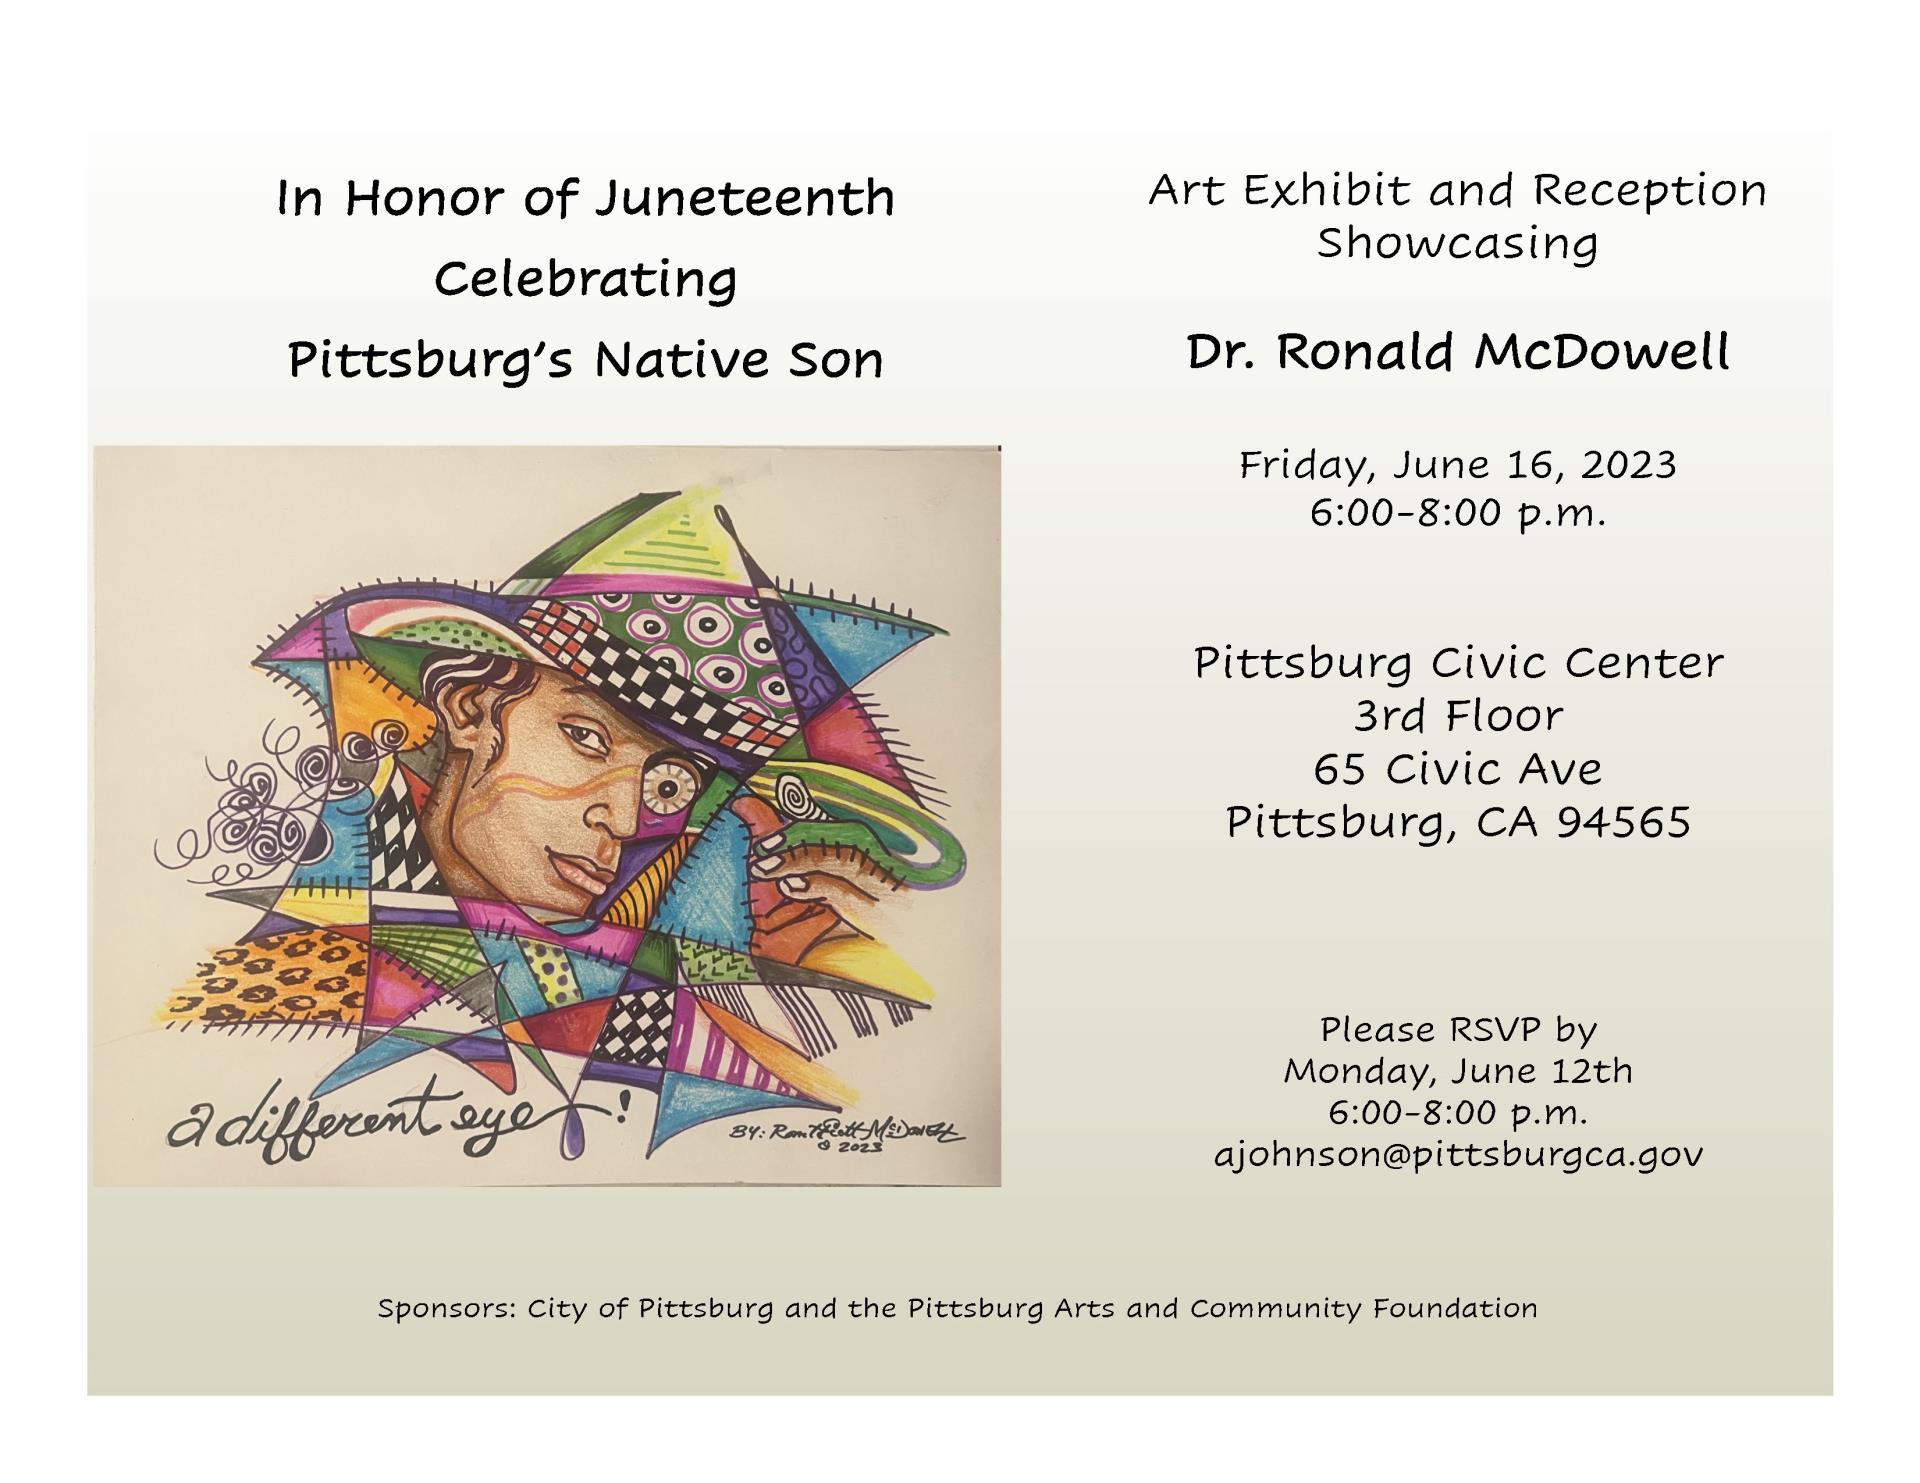 R.McDowell Invite